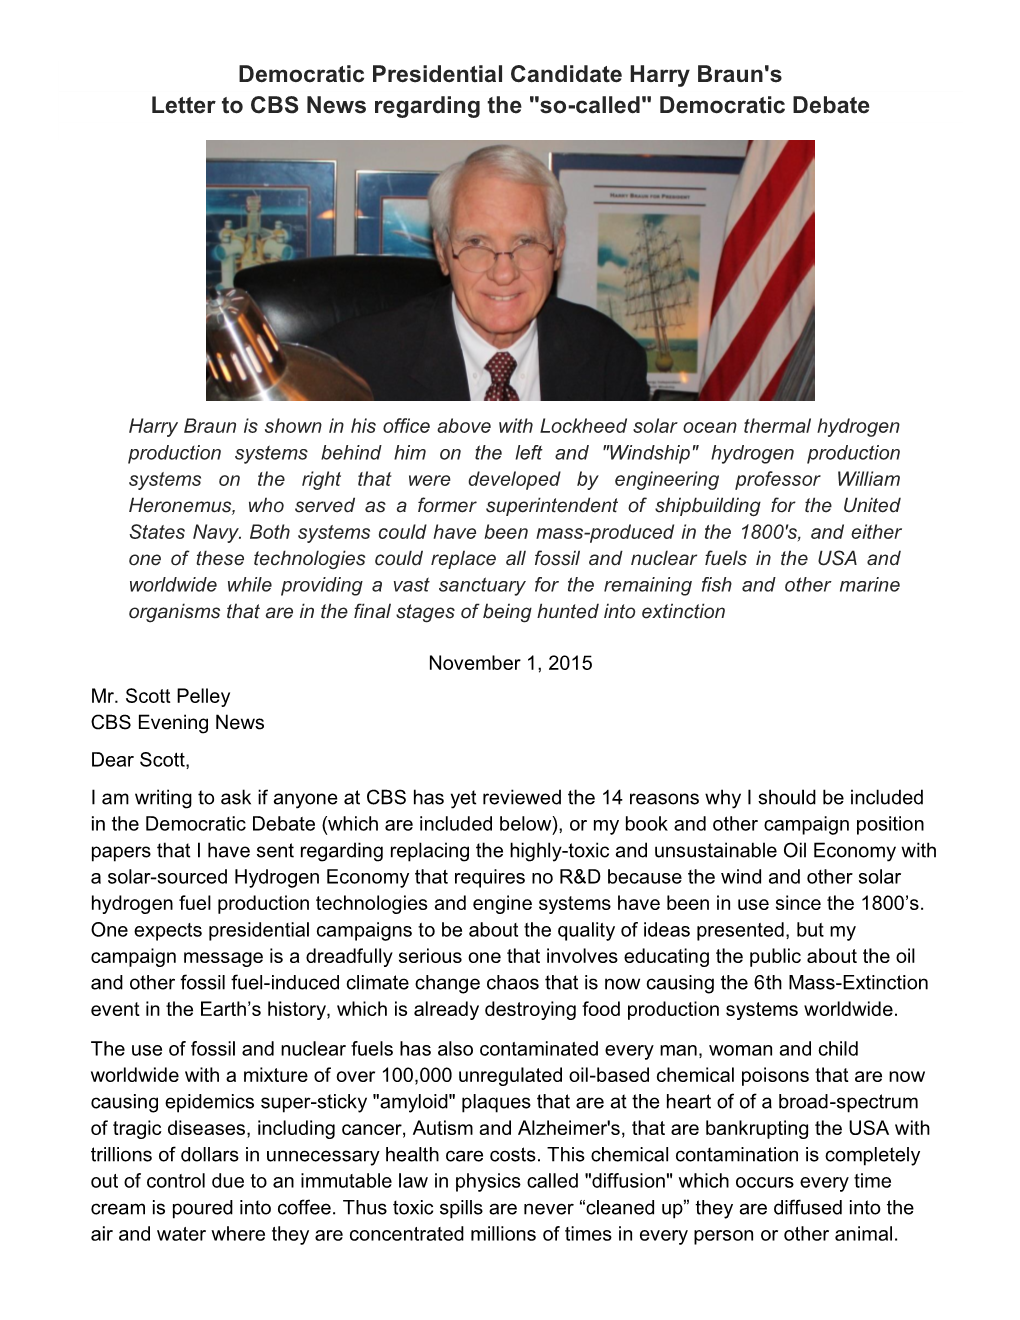 Harry Braun's Letter to CBS News Regarding the "So-Called" Democratic Debate